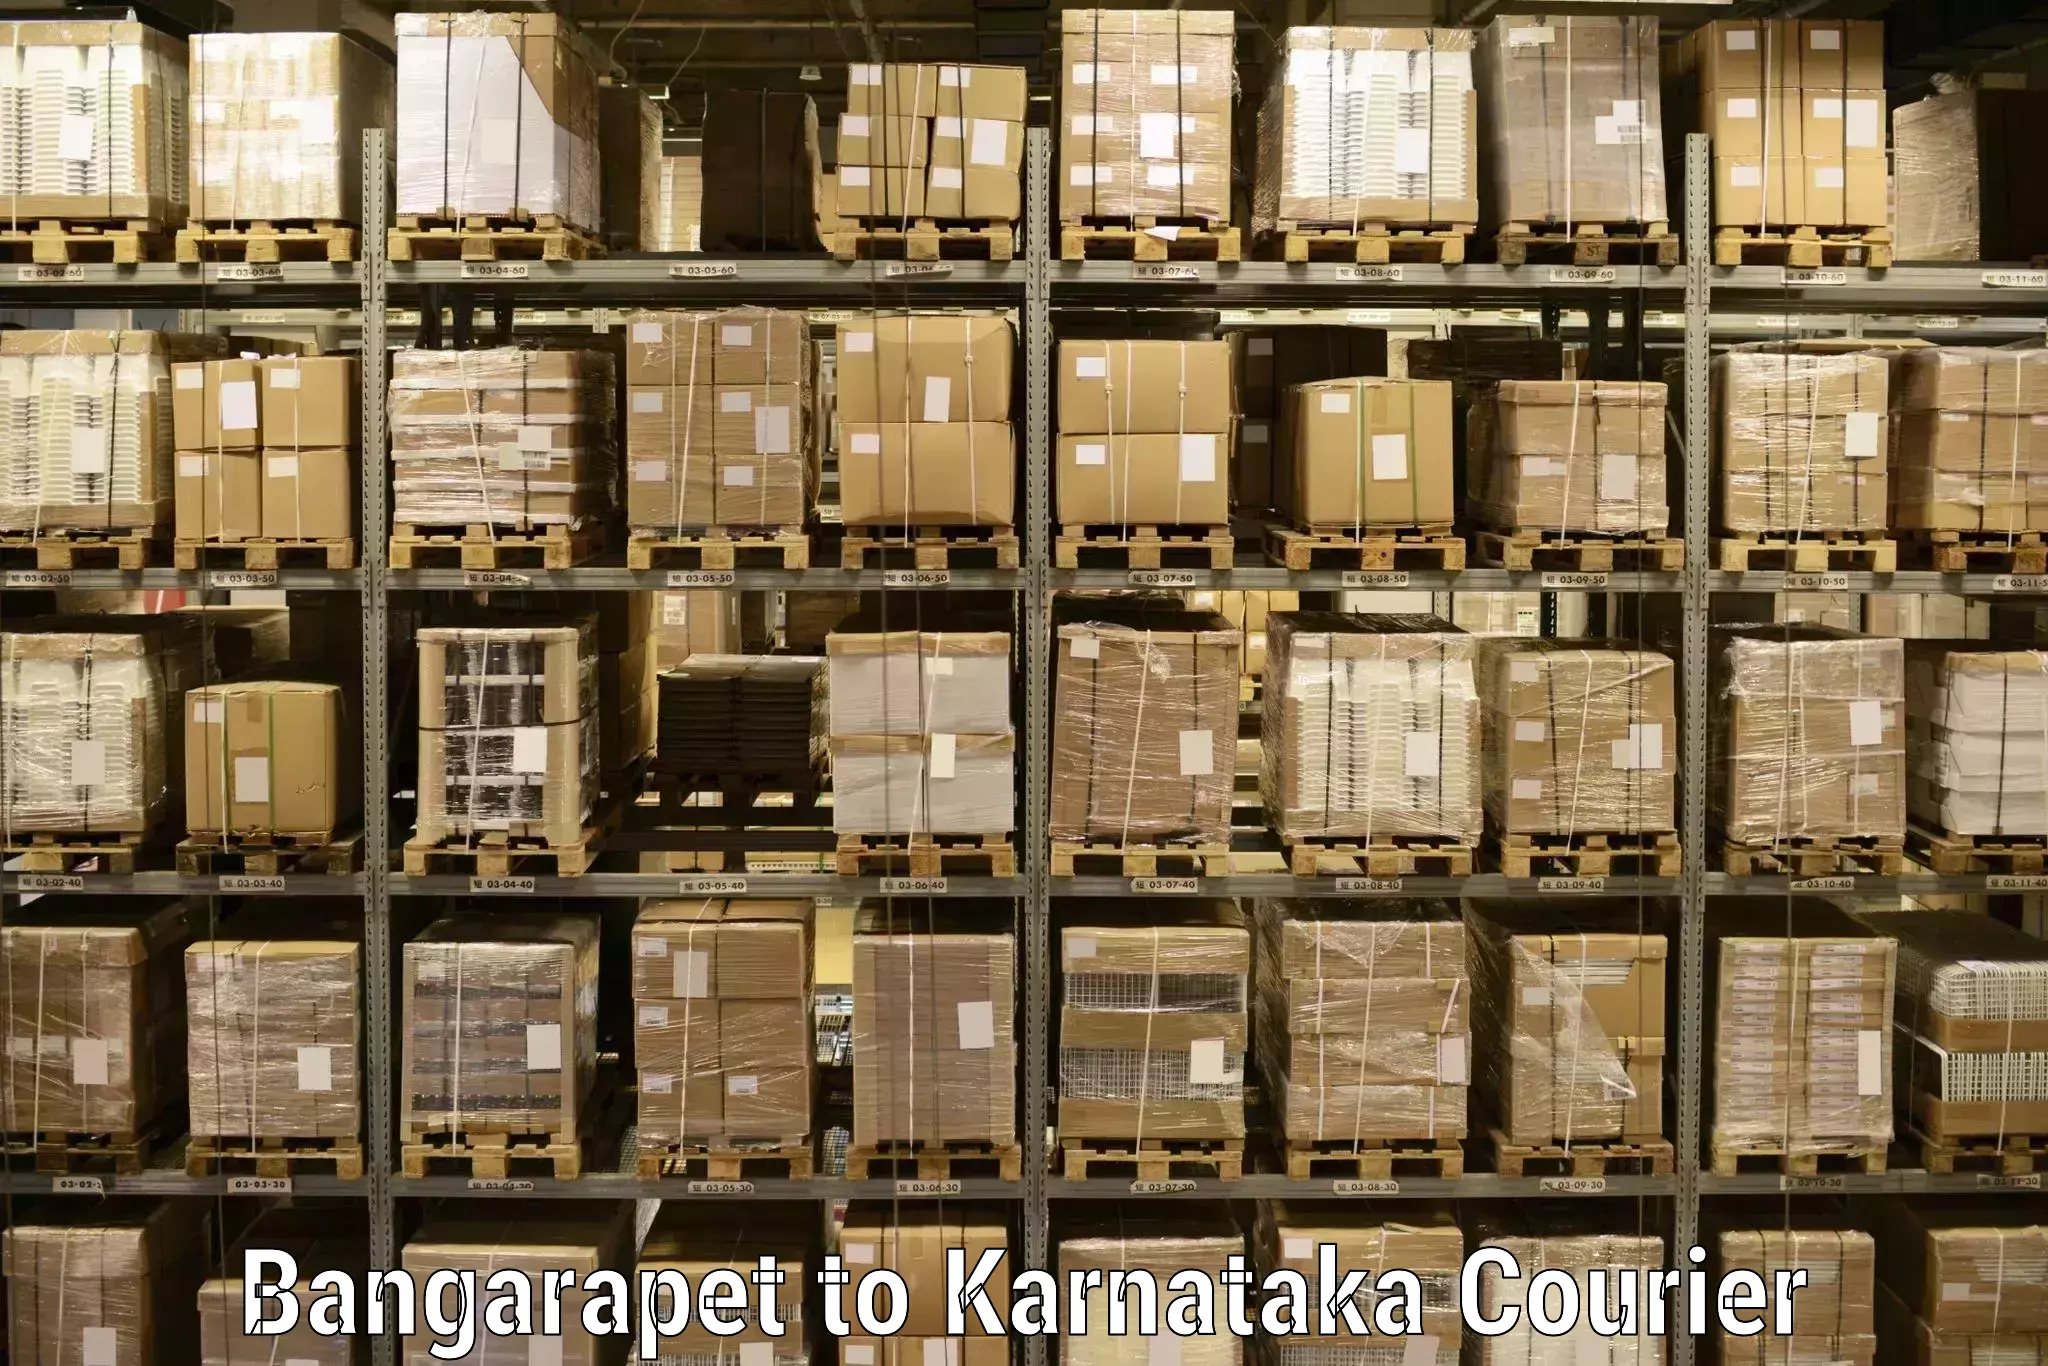 Express delivery capabilities Bangarapet to Kodagu